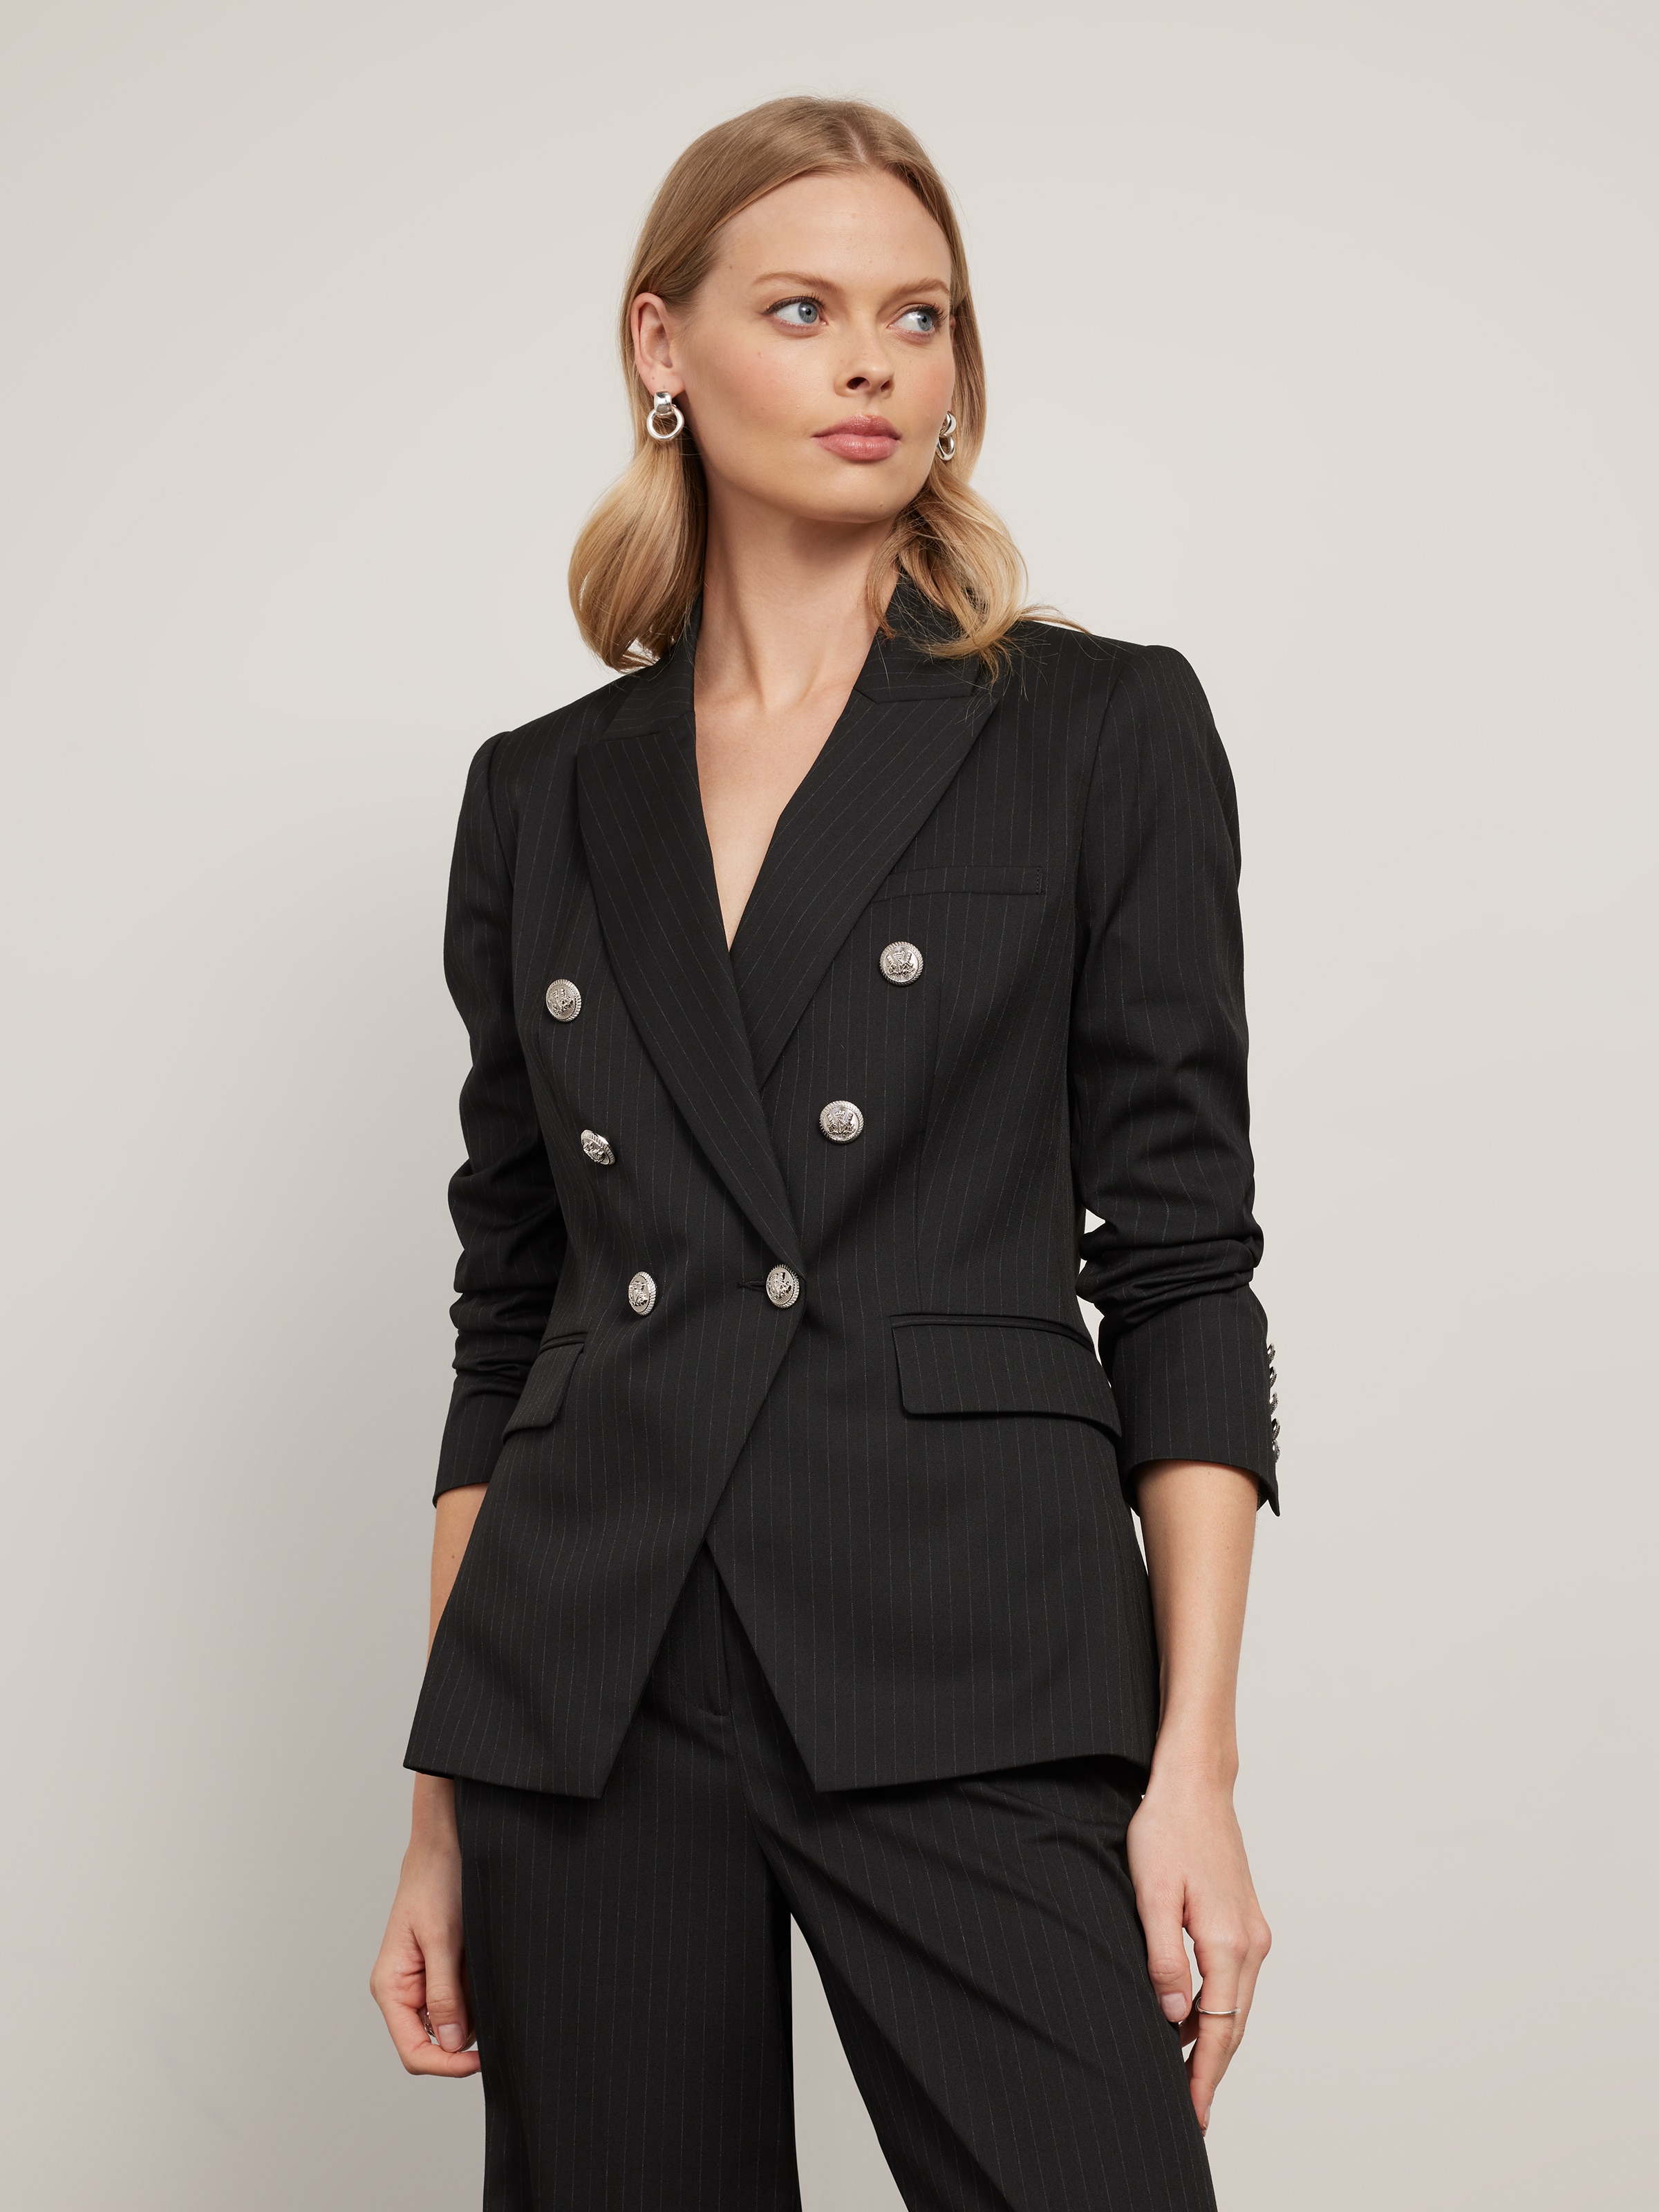 Suits Everyone Pinstripe Blazer - Portmans Online